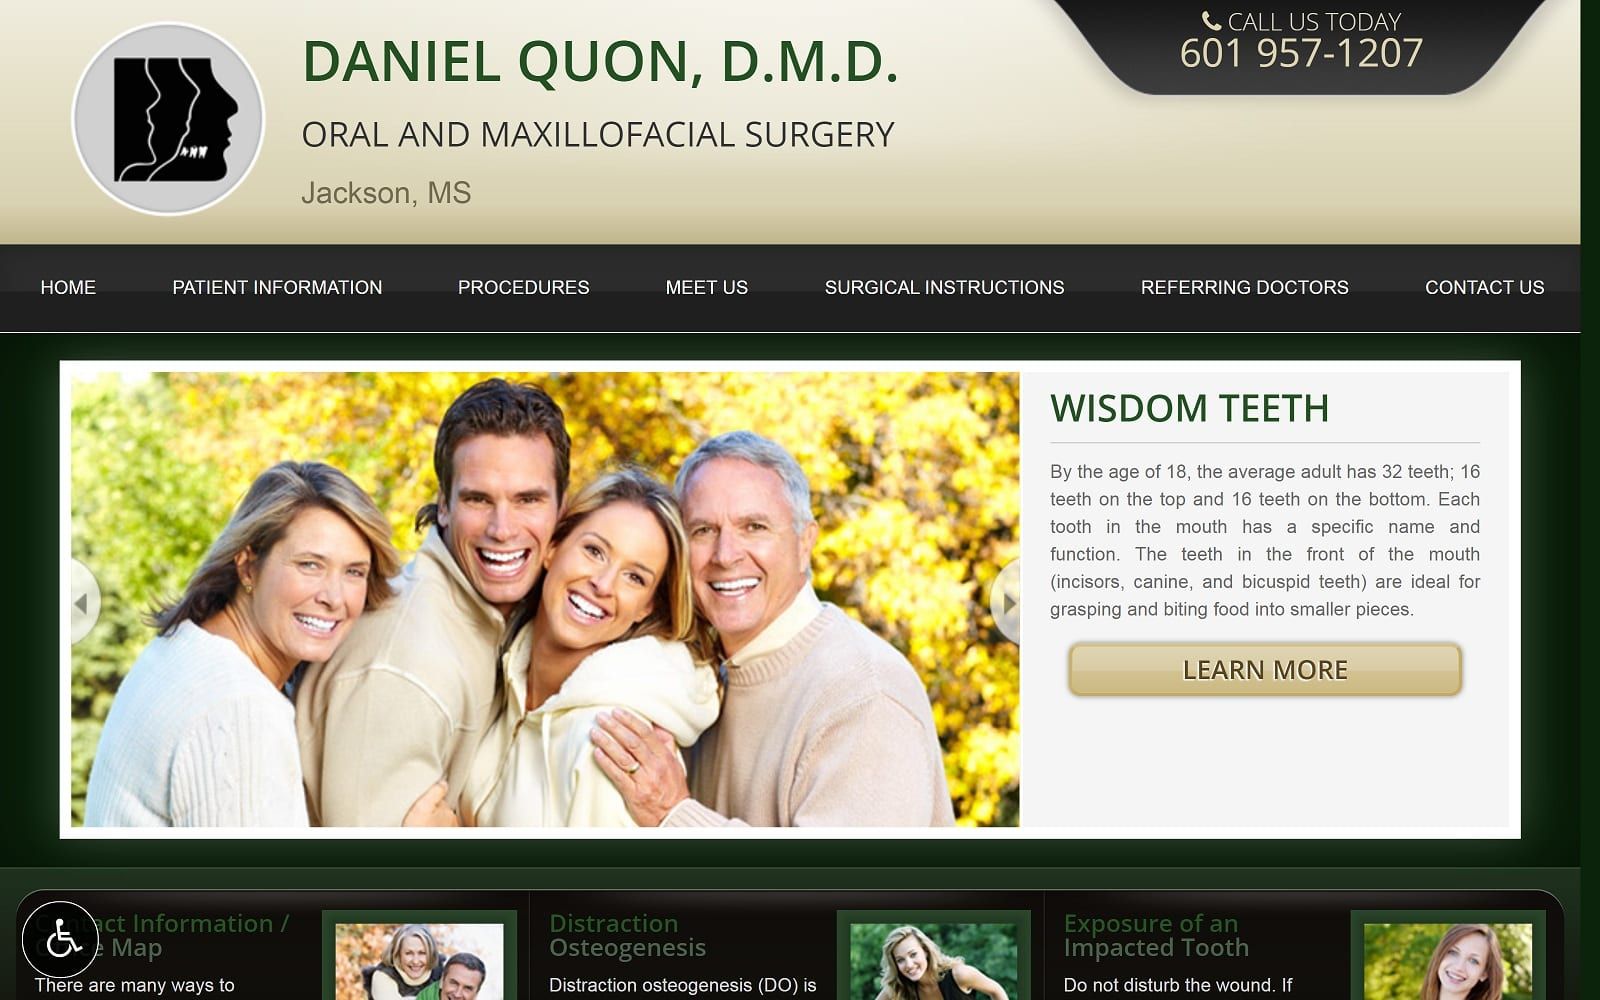 The Screenshot of Daniel Quon, D.M.D. danielquondmd.com Website